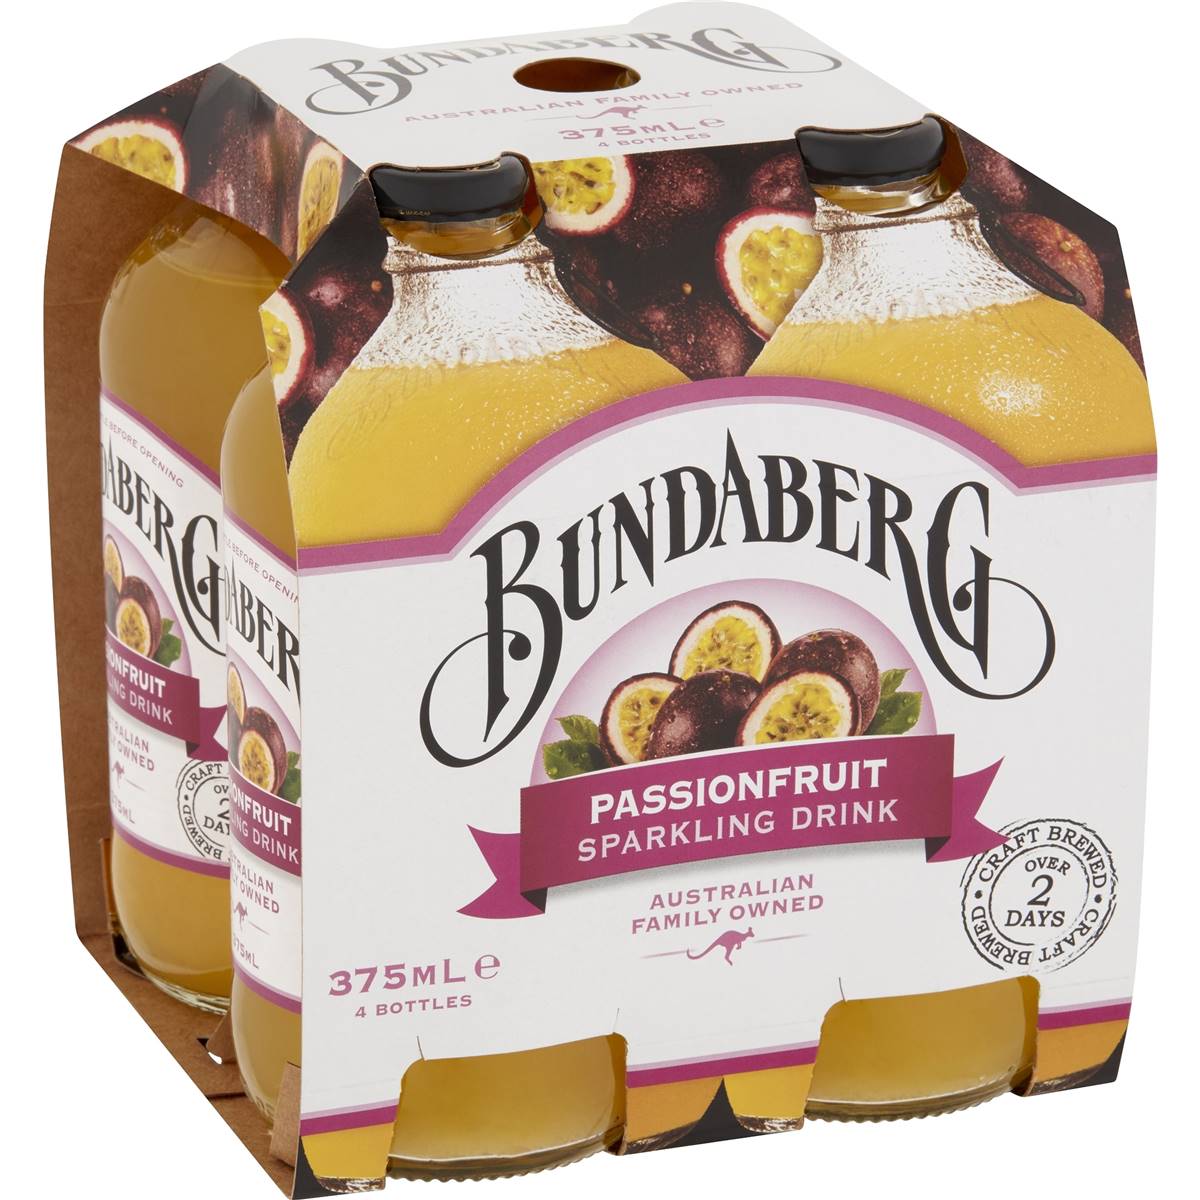 Bundaberg Sparkling Passionfruit Drink Bottles 4x375ml